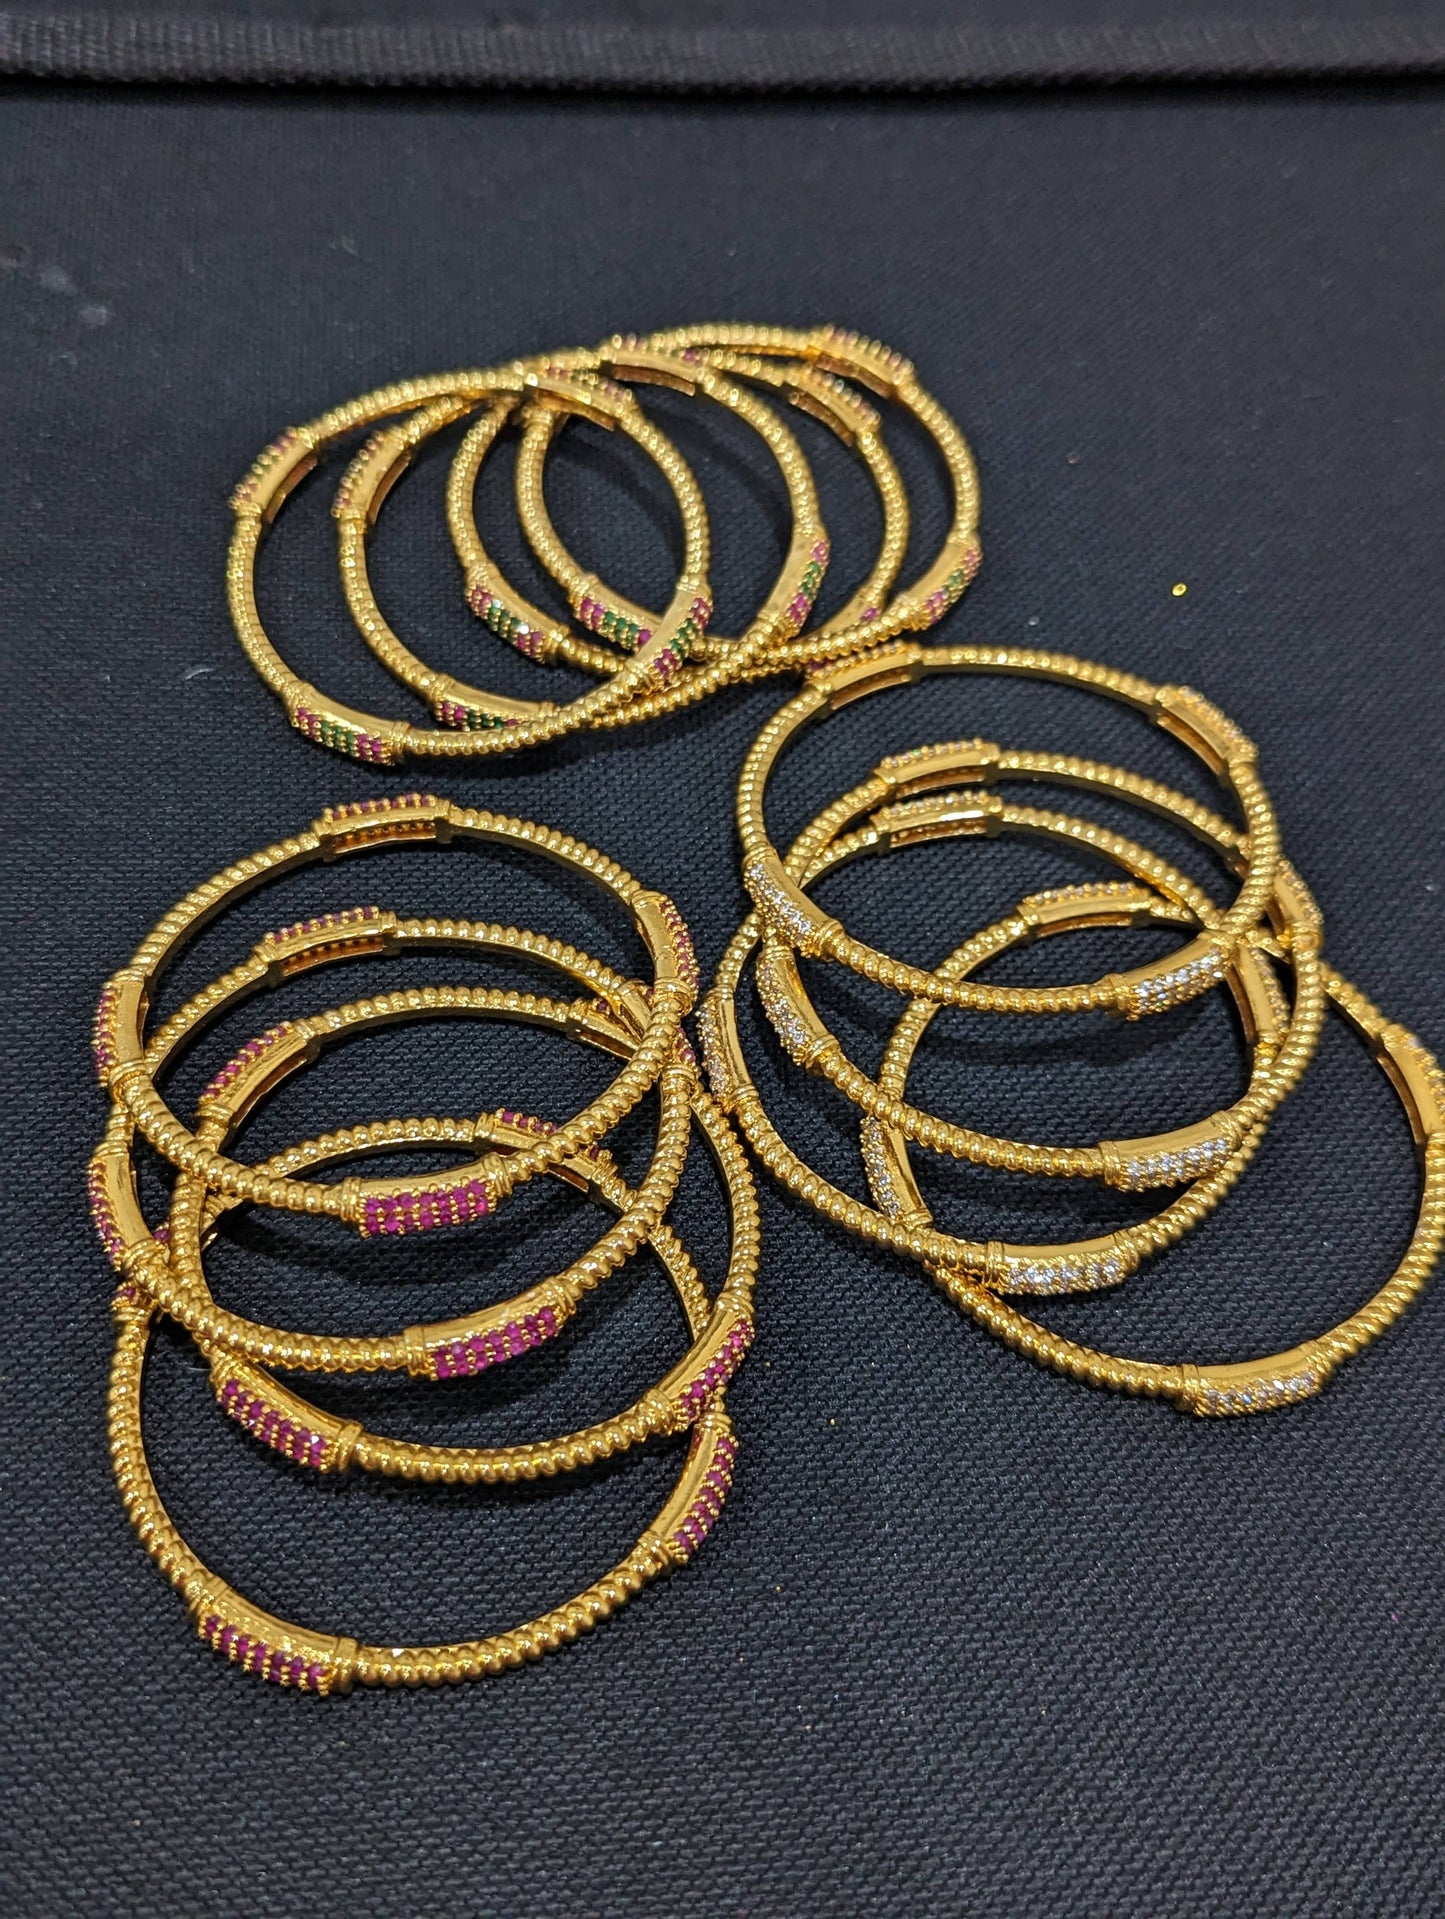 Alternate Rectangle design CZ bangles - Set of 4